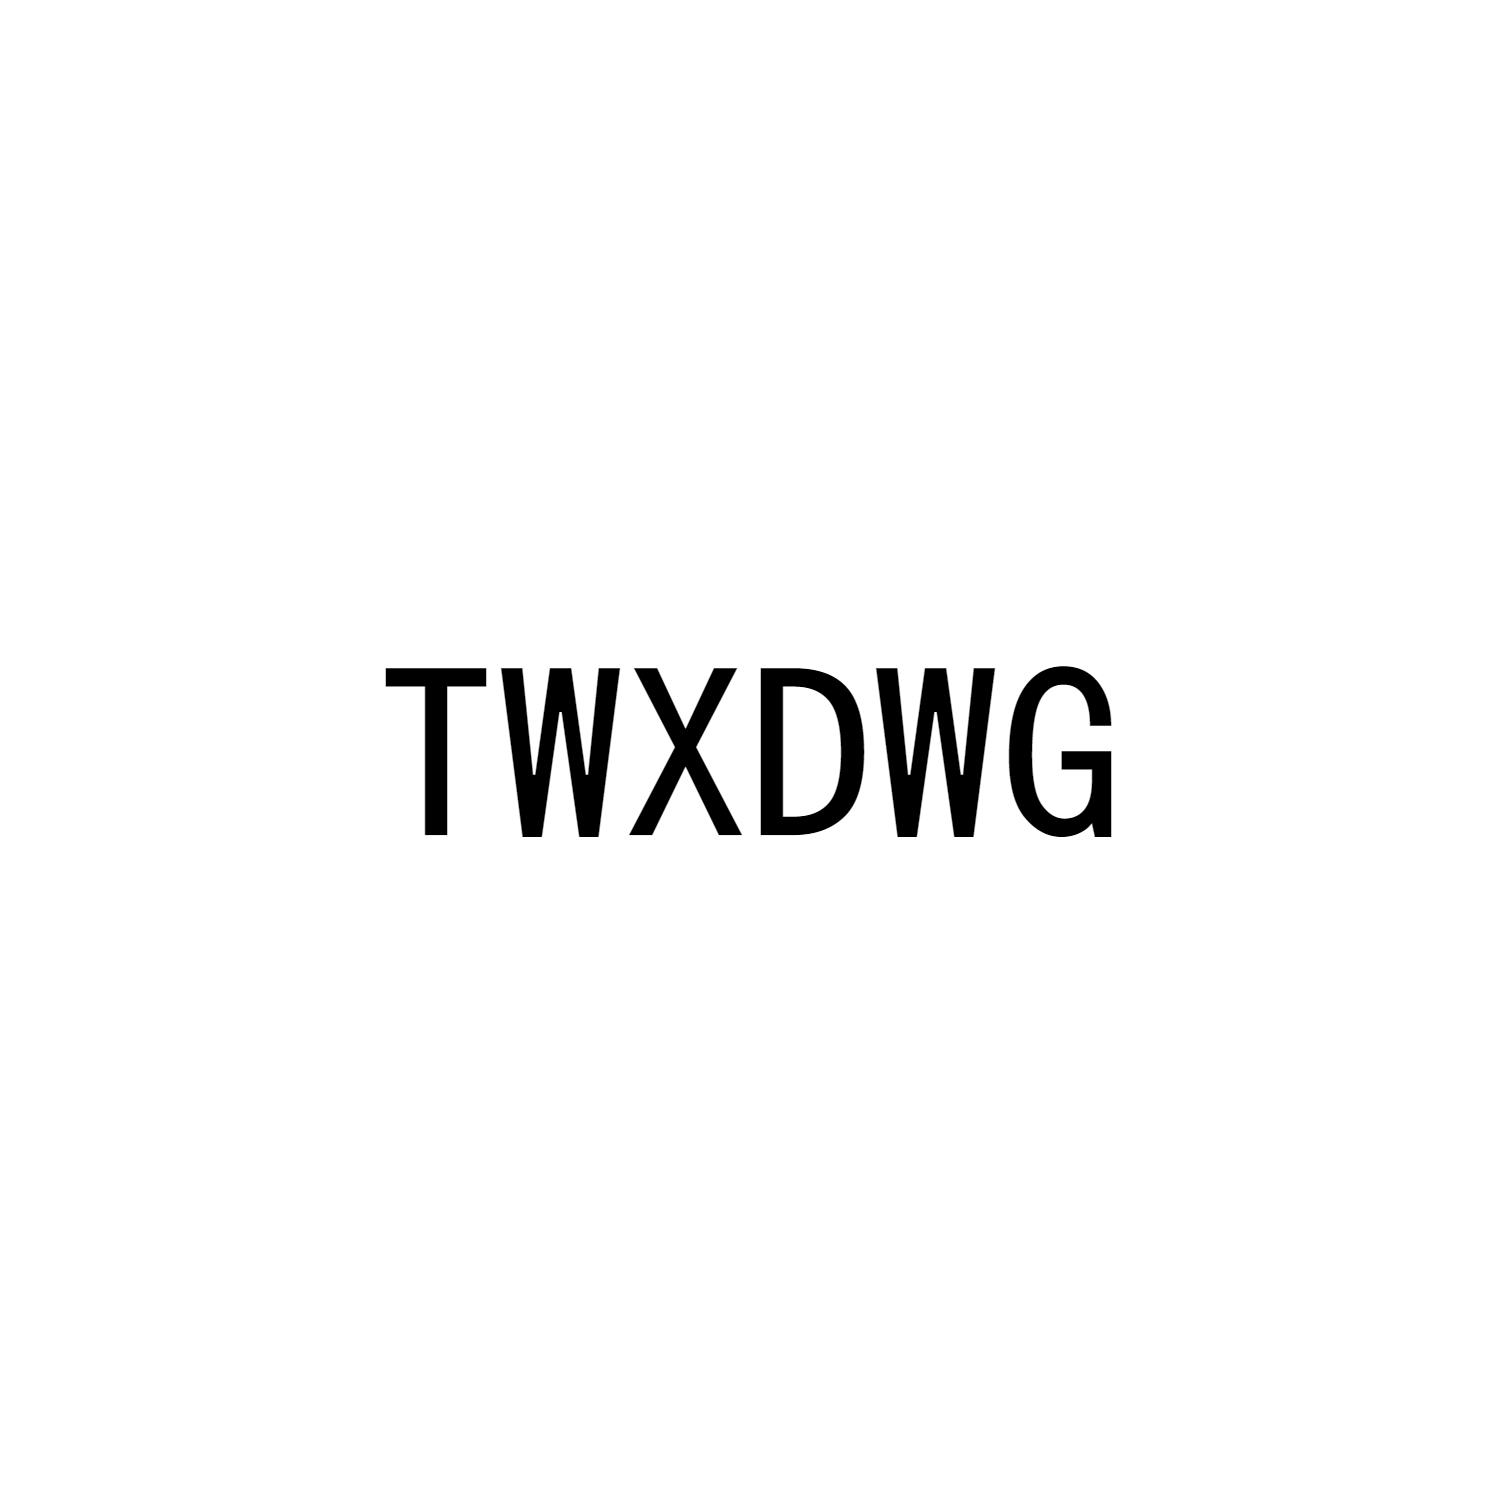 TWXDWG